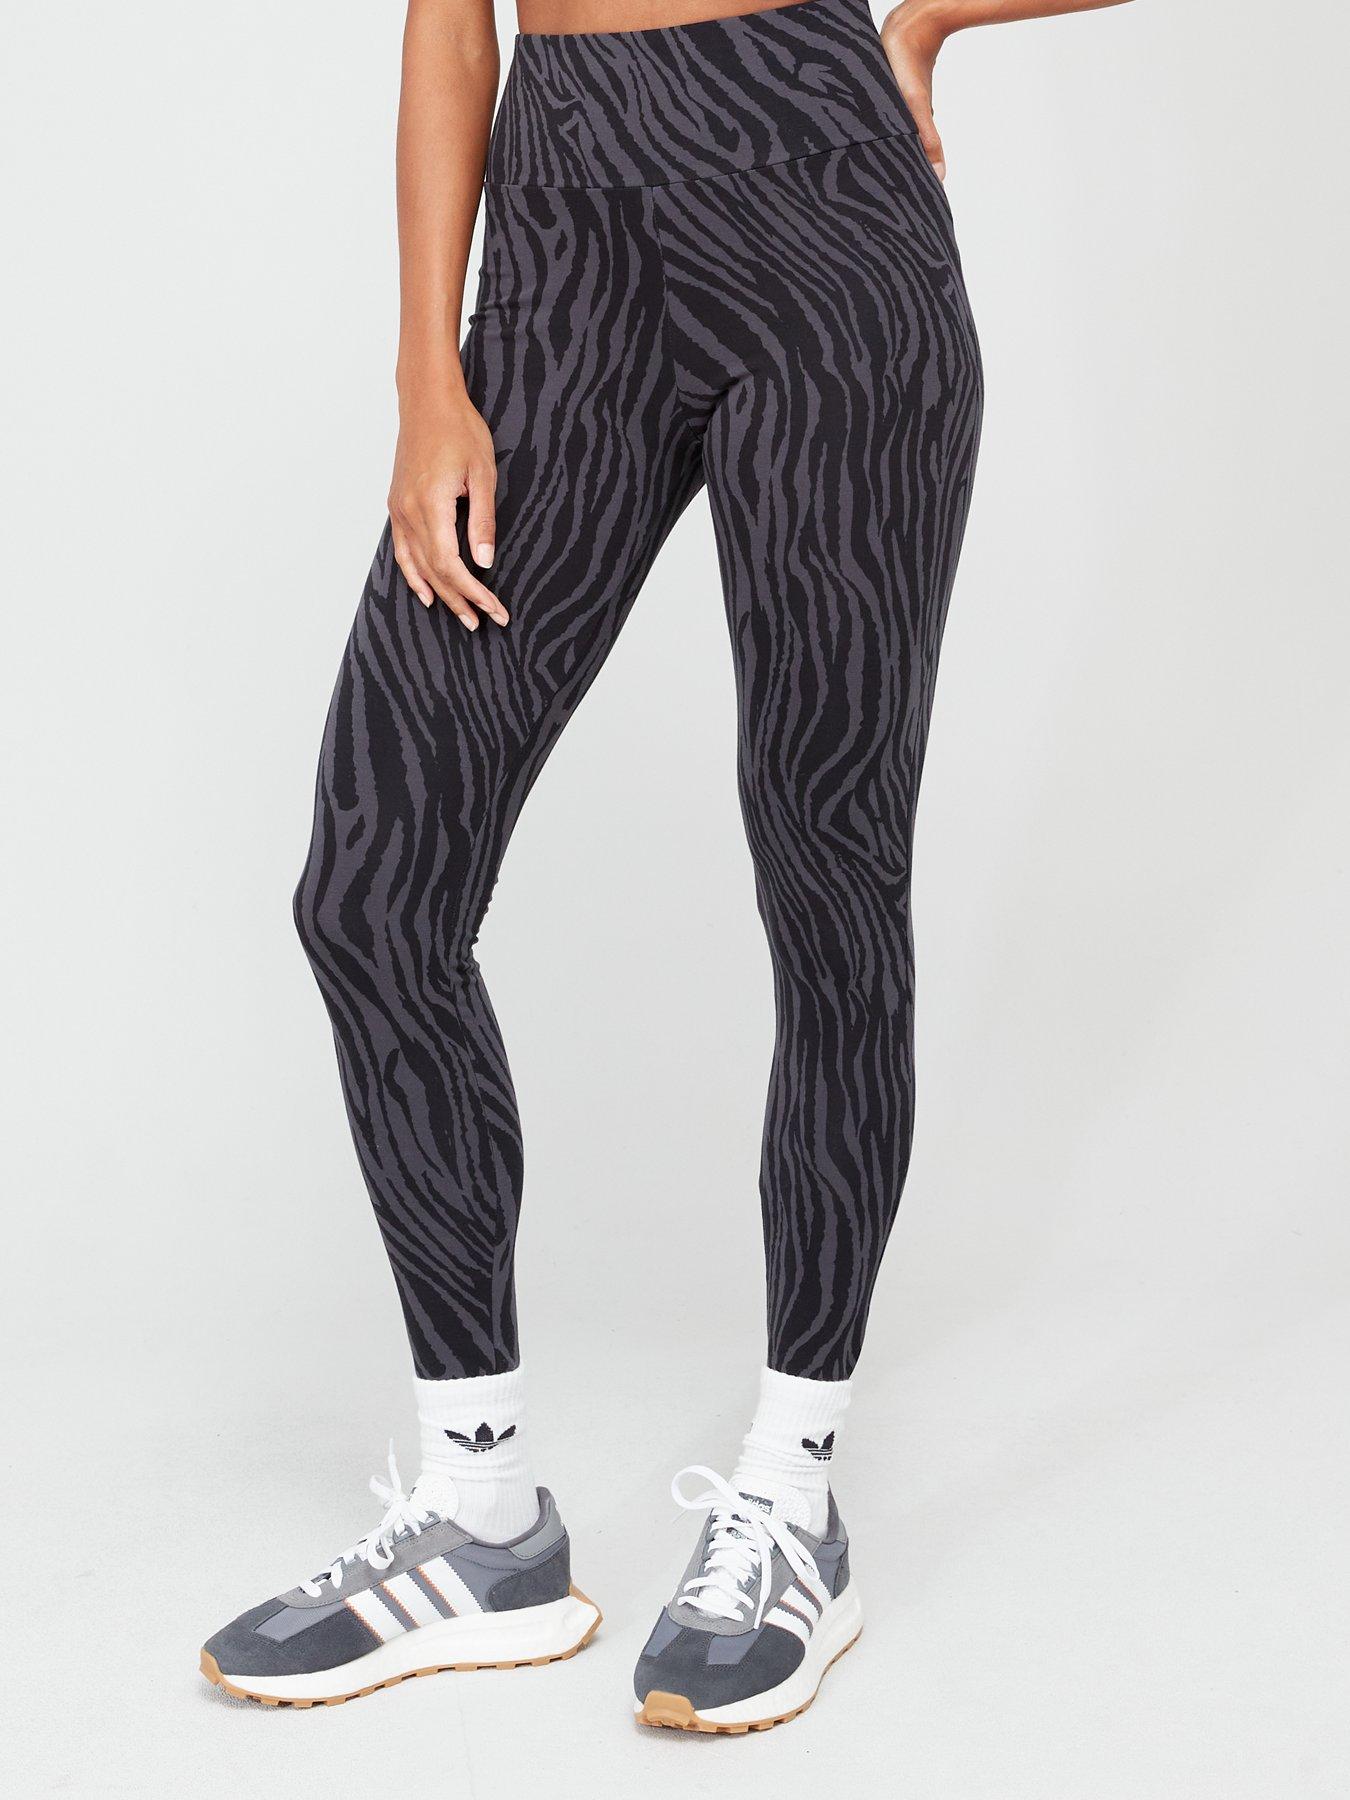 adidas Originals 'animal abstract' leggings in black with zebra print